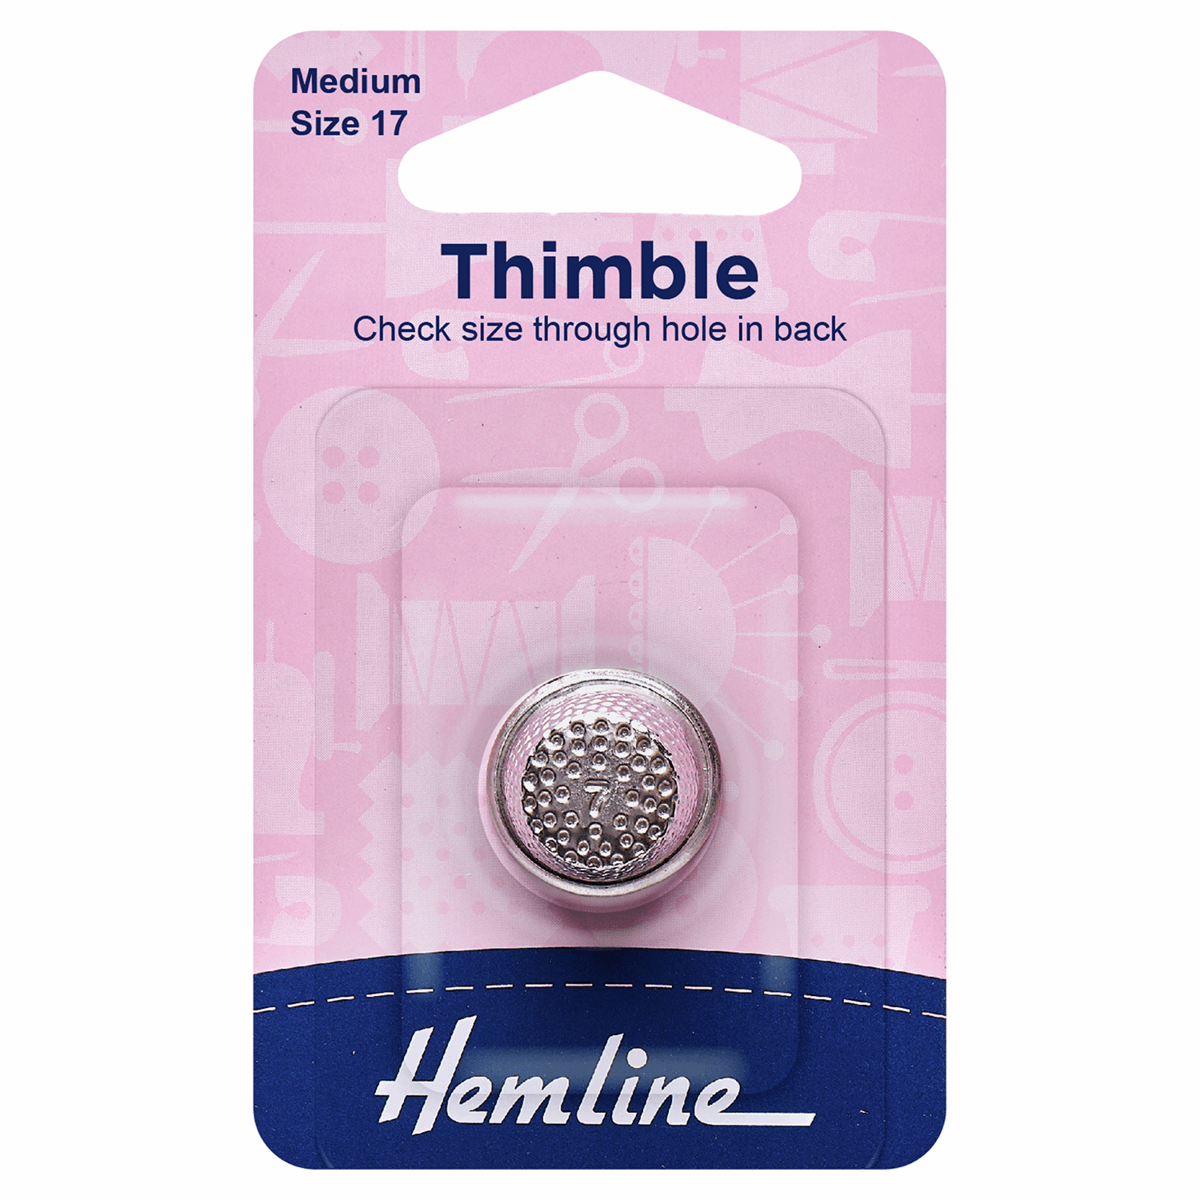 Hemline Metal Thimble: Size 17 - Medium